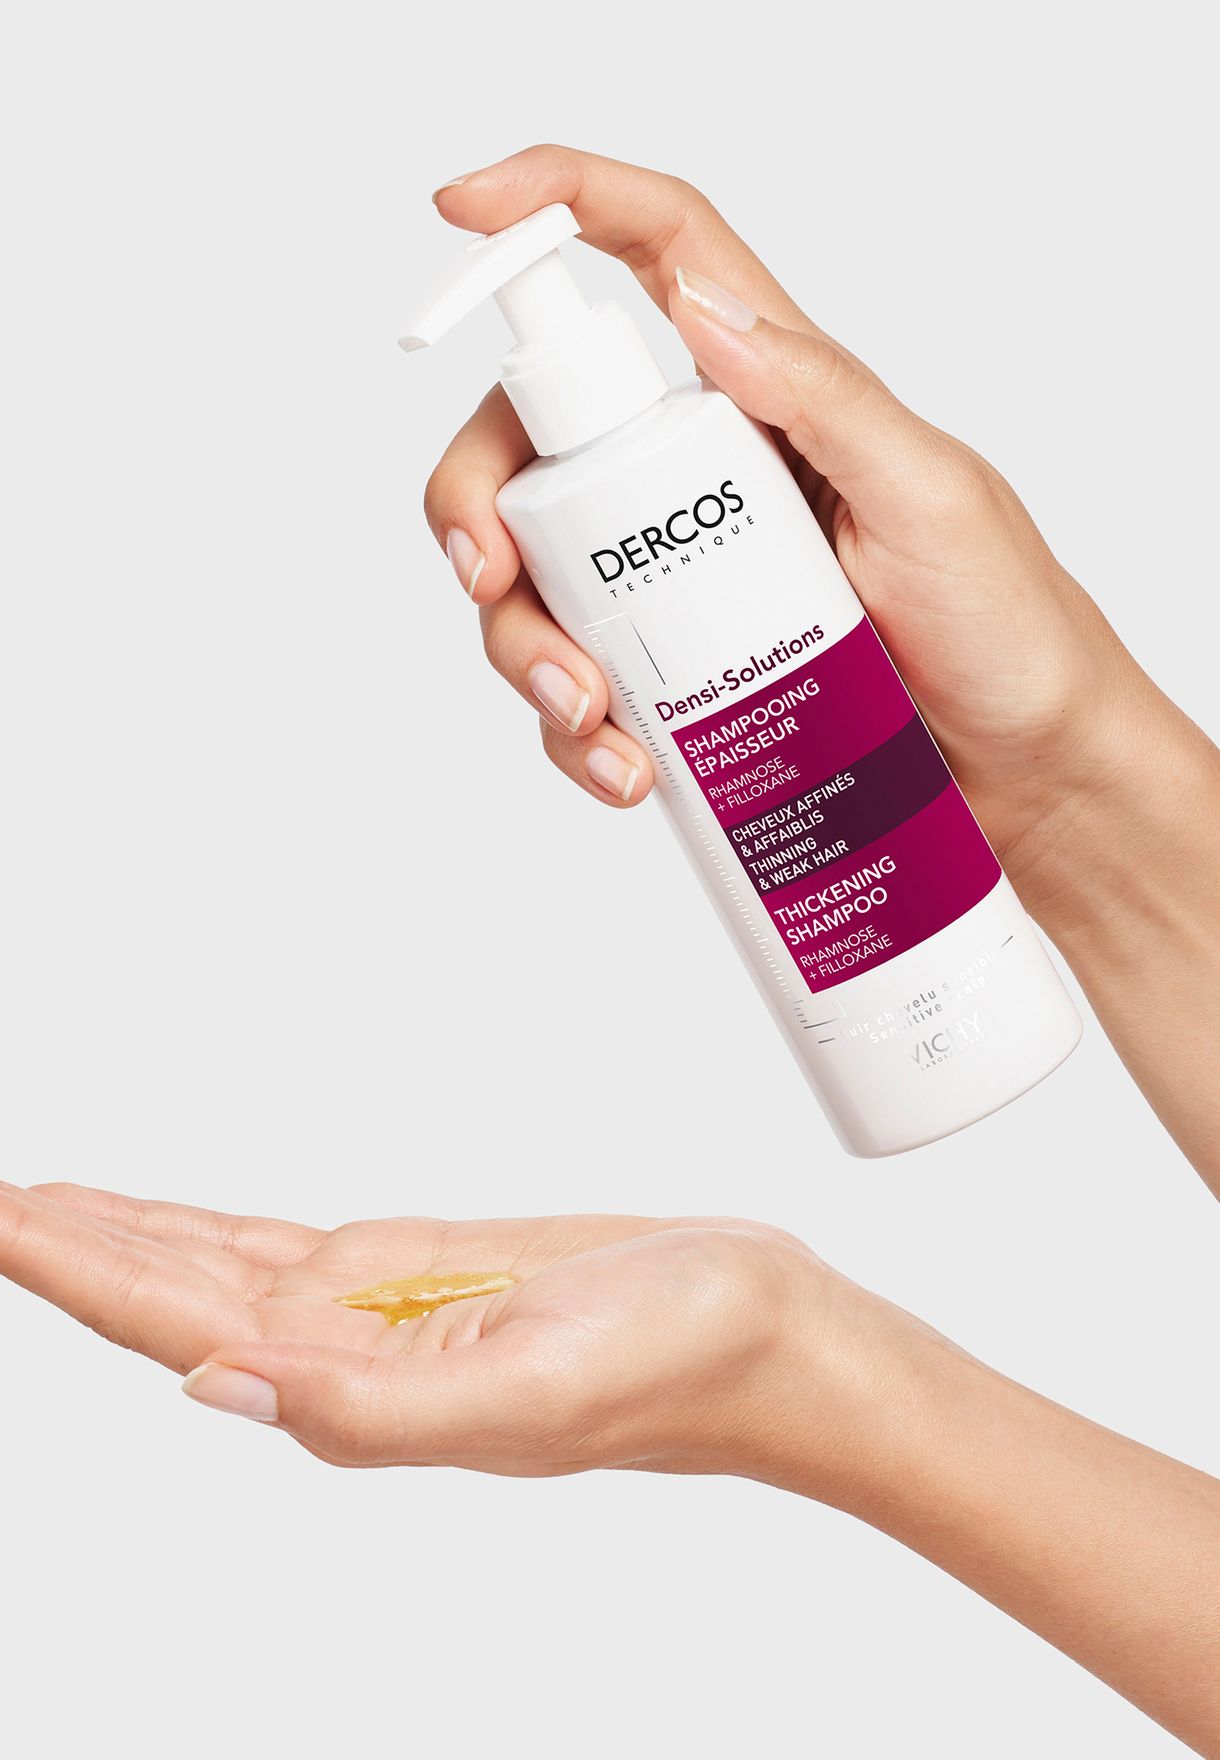 Dercos Densi-Solutions Thickening Shampoo 250ml